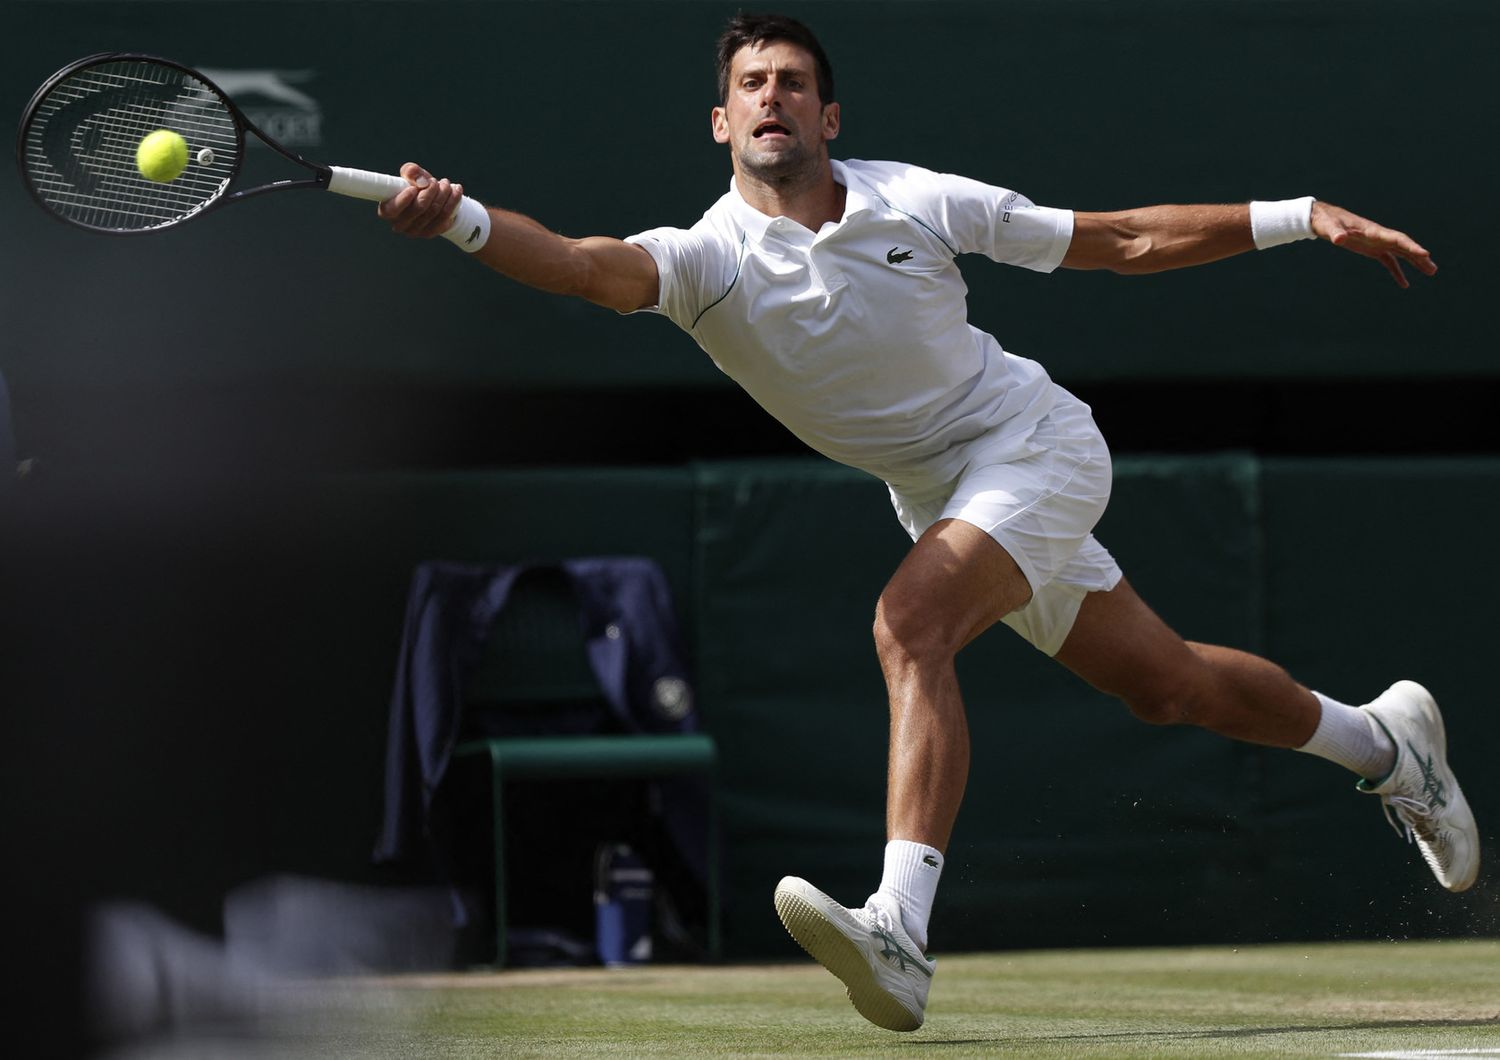 Novak Djokovic nella finale di Wimbledon 2021 contro Matteo Berrettini&nbsp;